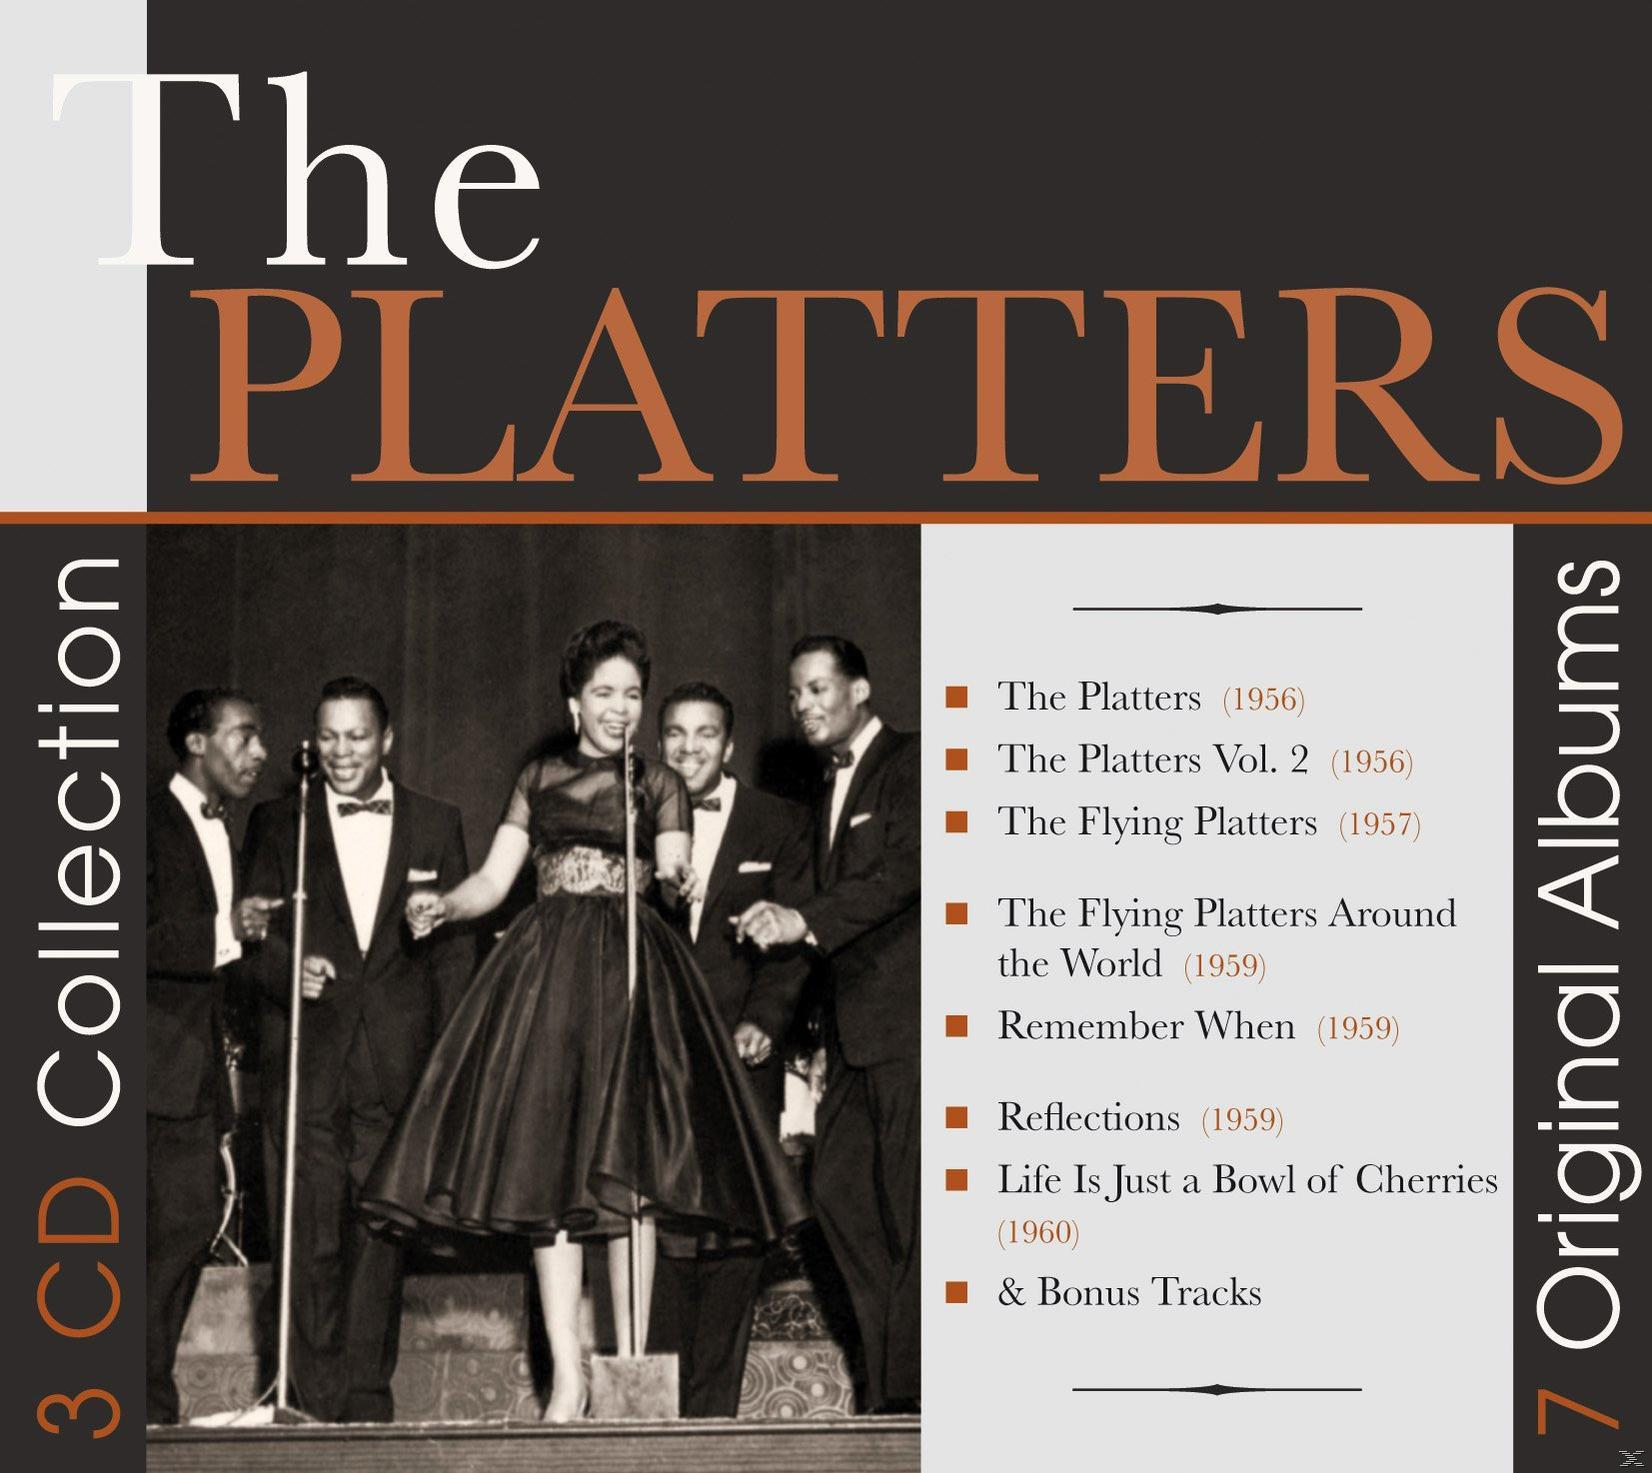 The Platters  - 7 (CD) - Original Albums